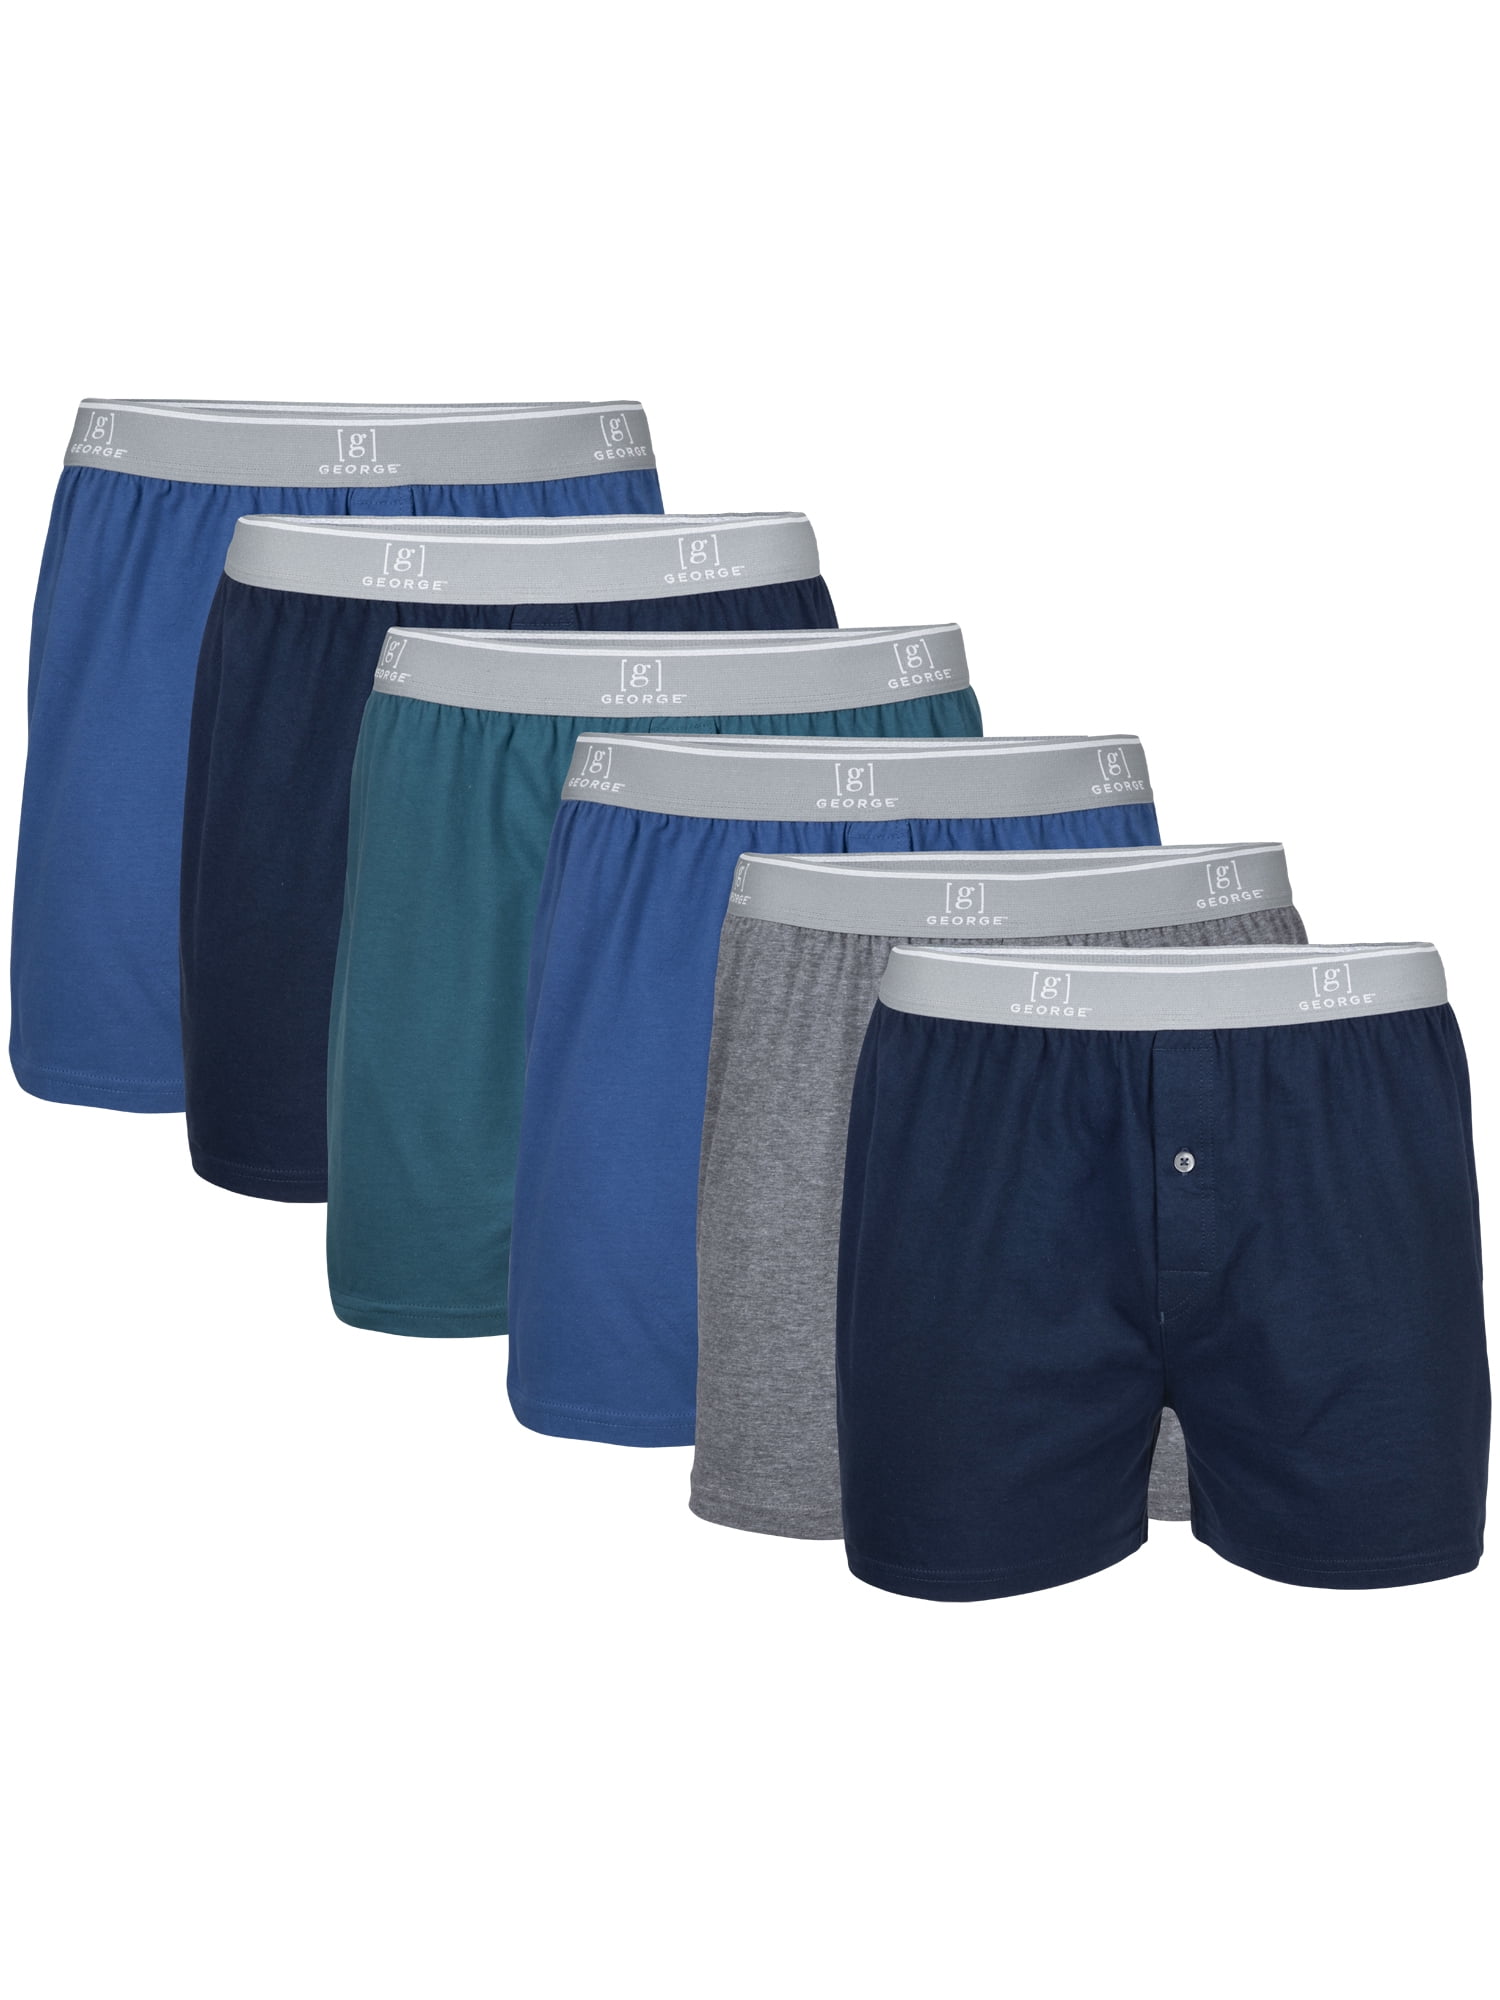 12 pairs Mens Designer Loose Shorts Comfort Jersey Underwear Billy Boxers Cotton 